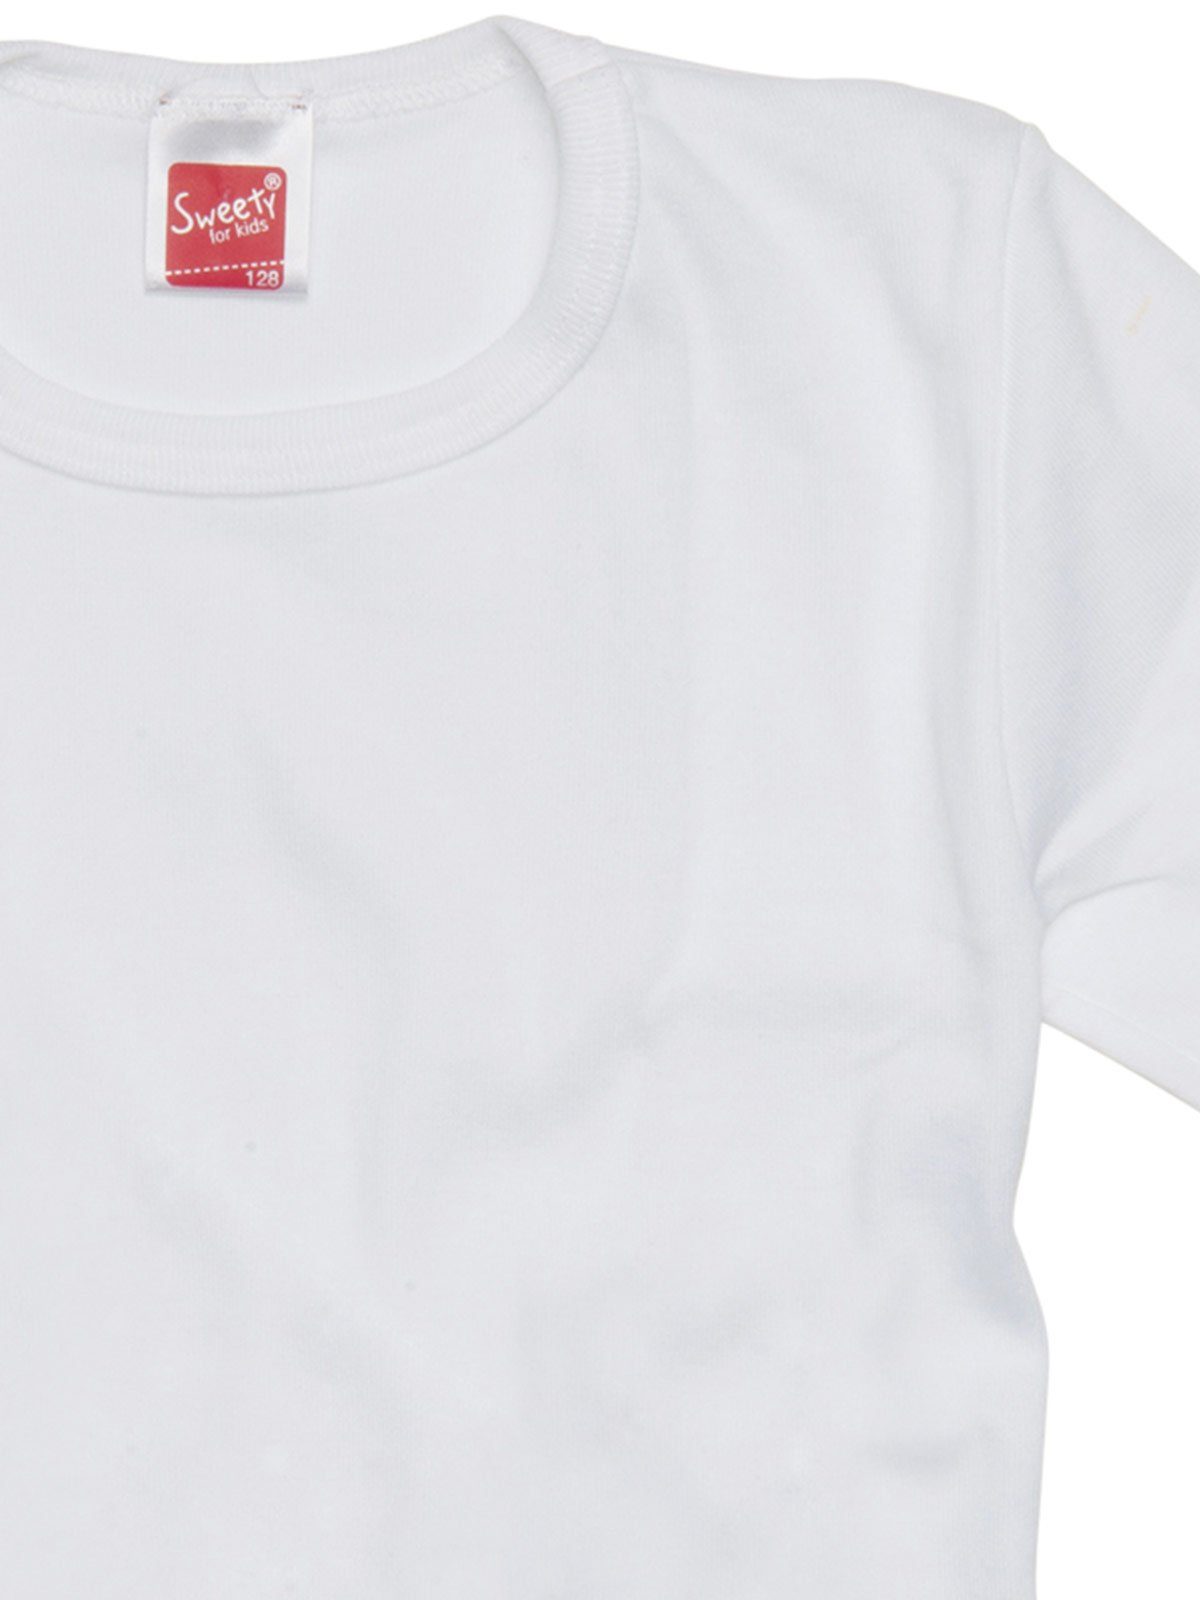 for 1-St) (Stück, Achselhemd hohe Markenqualität Kids Winterwäsche Kinder Shirt Sweety weiss